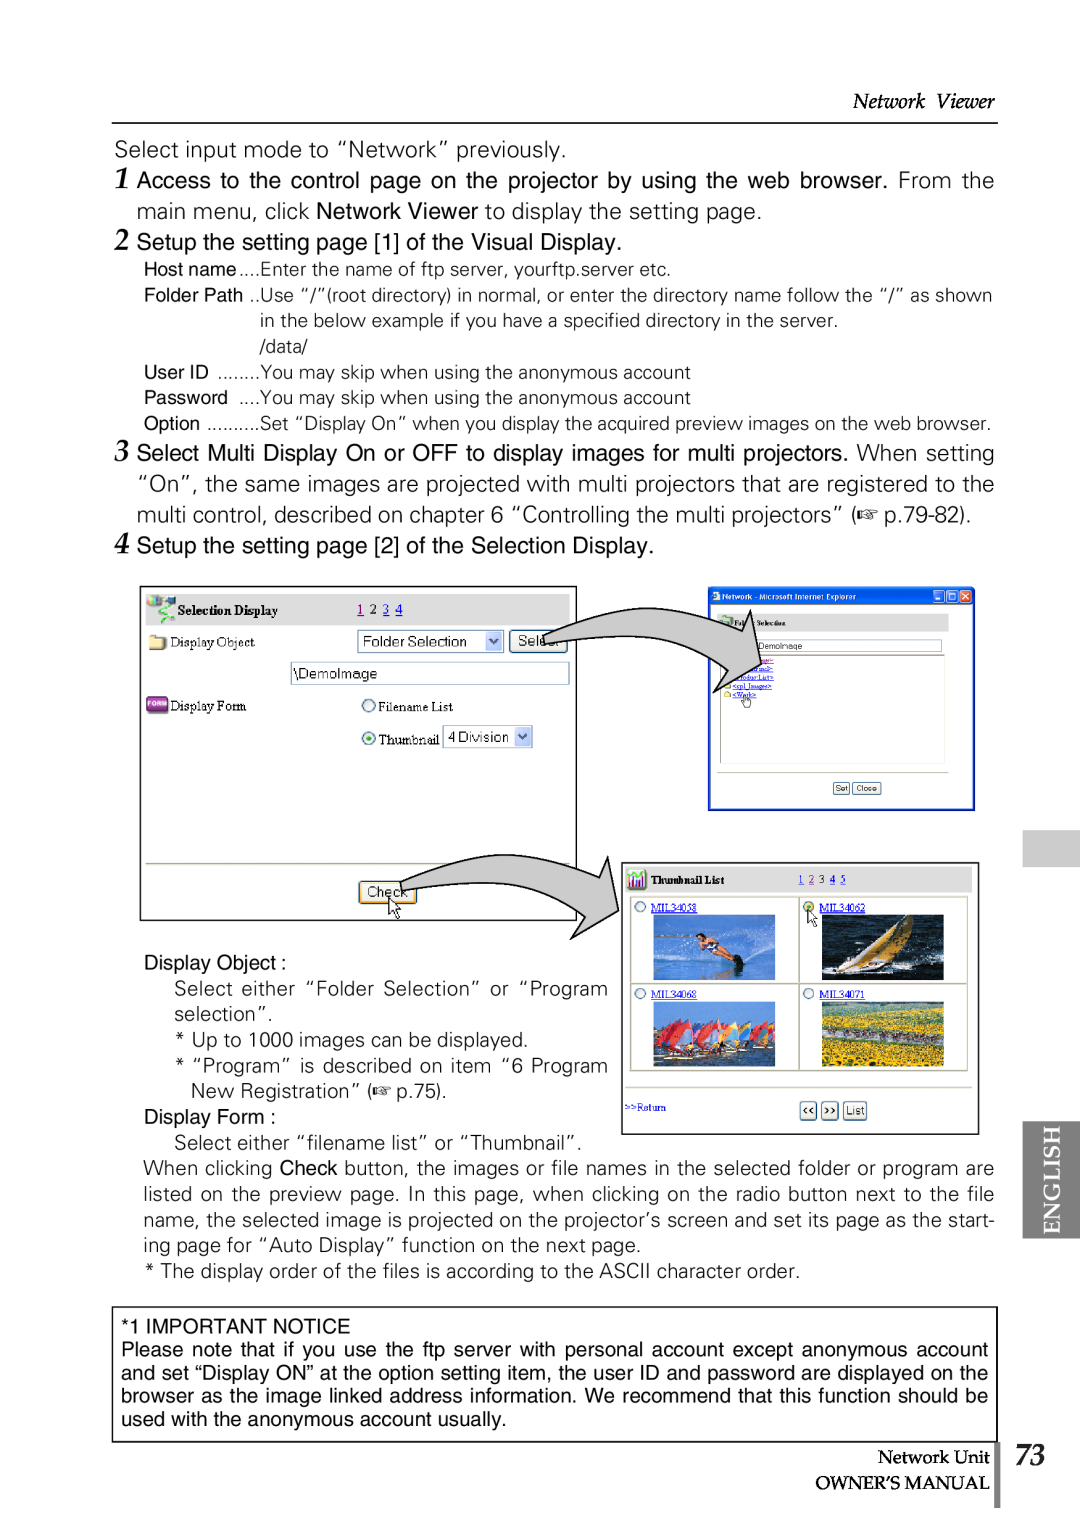 Sanyo POA-PN02 Setup the setting page 2 of the Selection Display, Select input mode to “Network” previously, English 